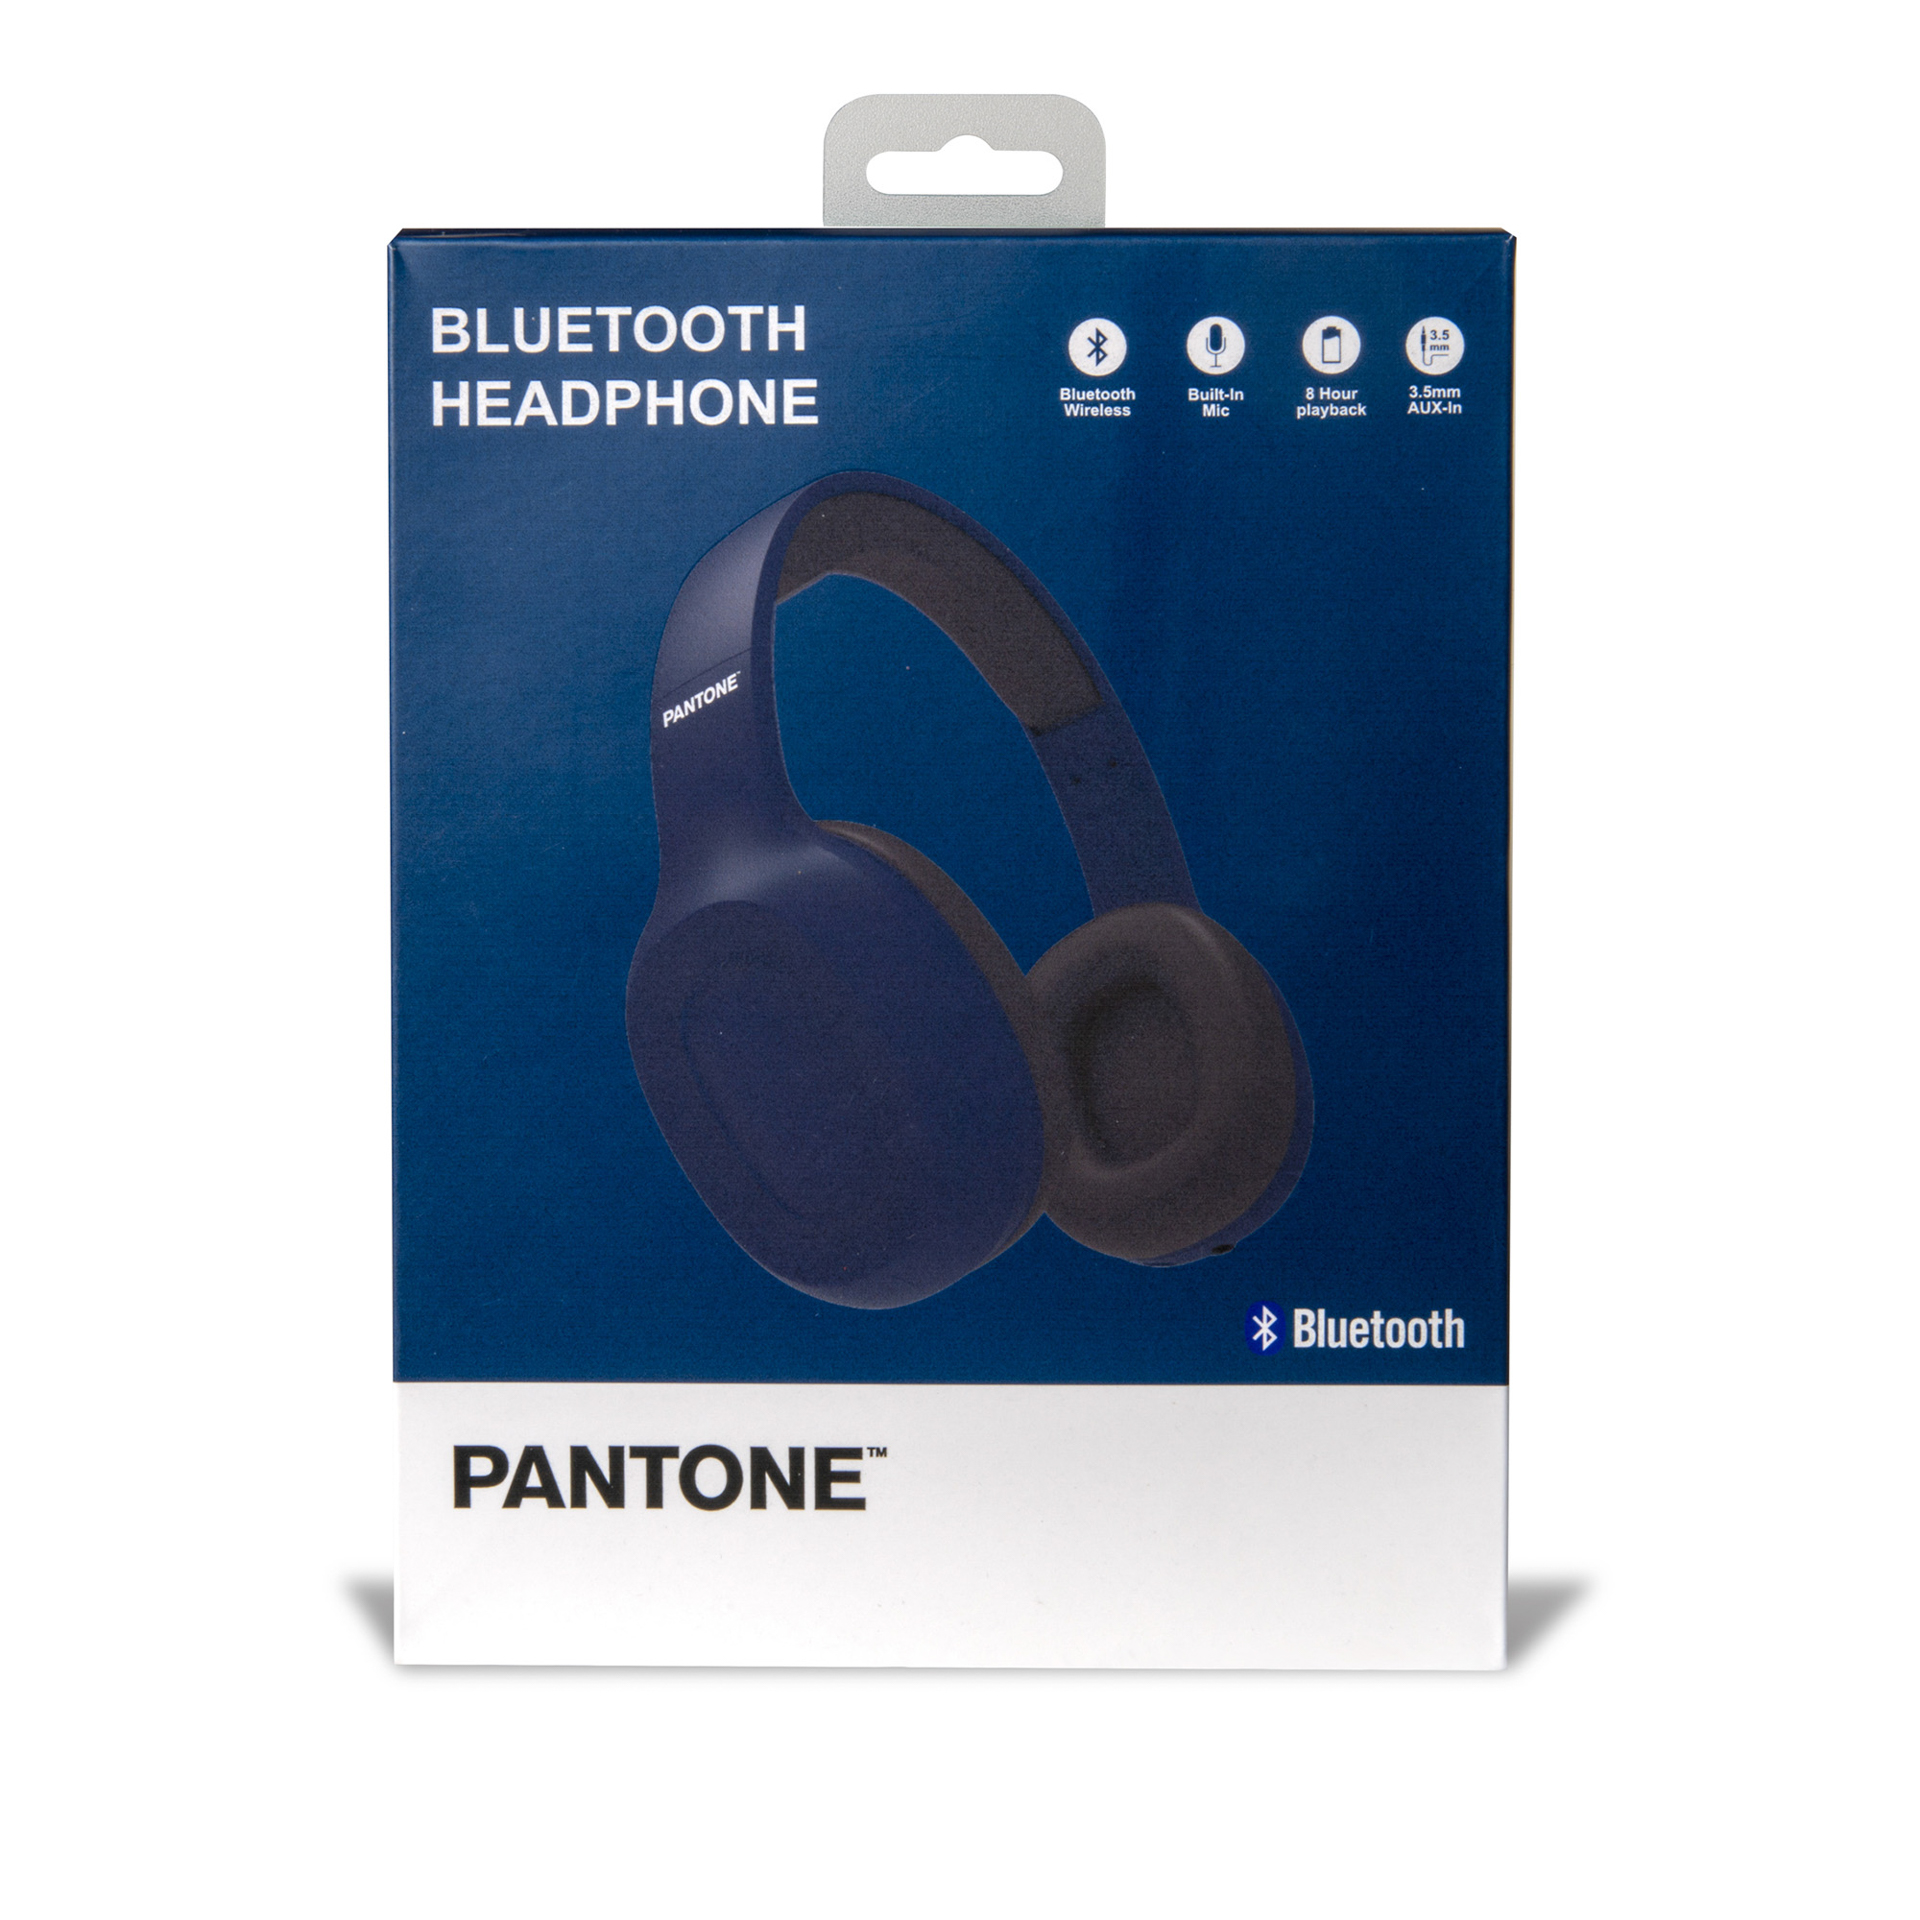 Cuffie Stereo Bluetooth Wireless Linea Pantone - Giallo, , large